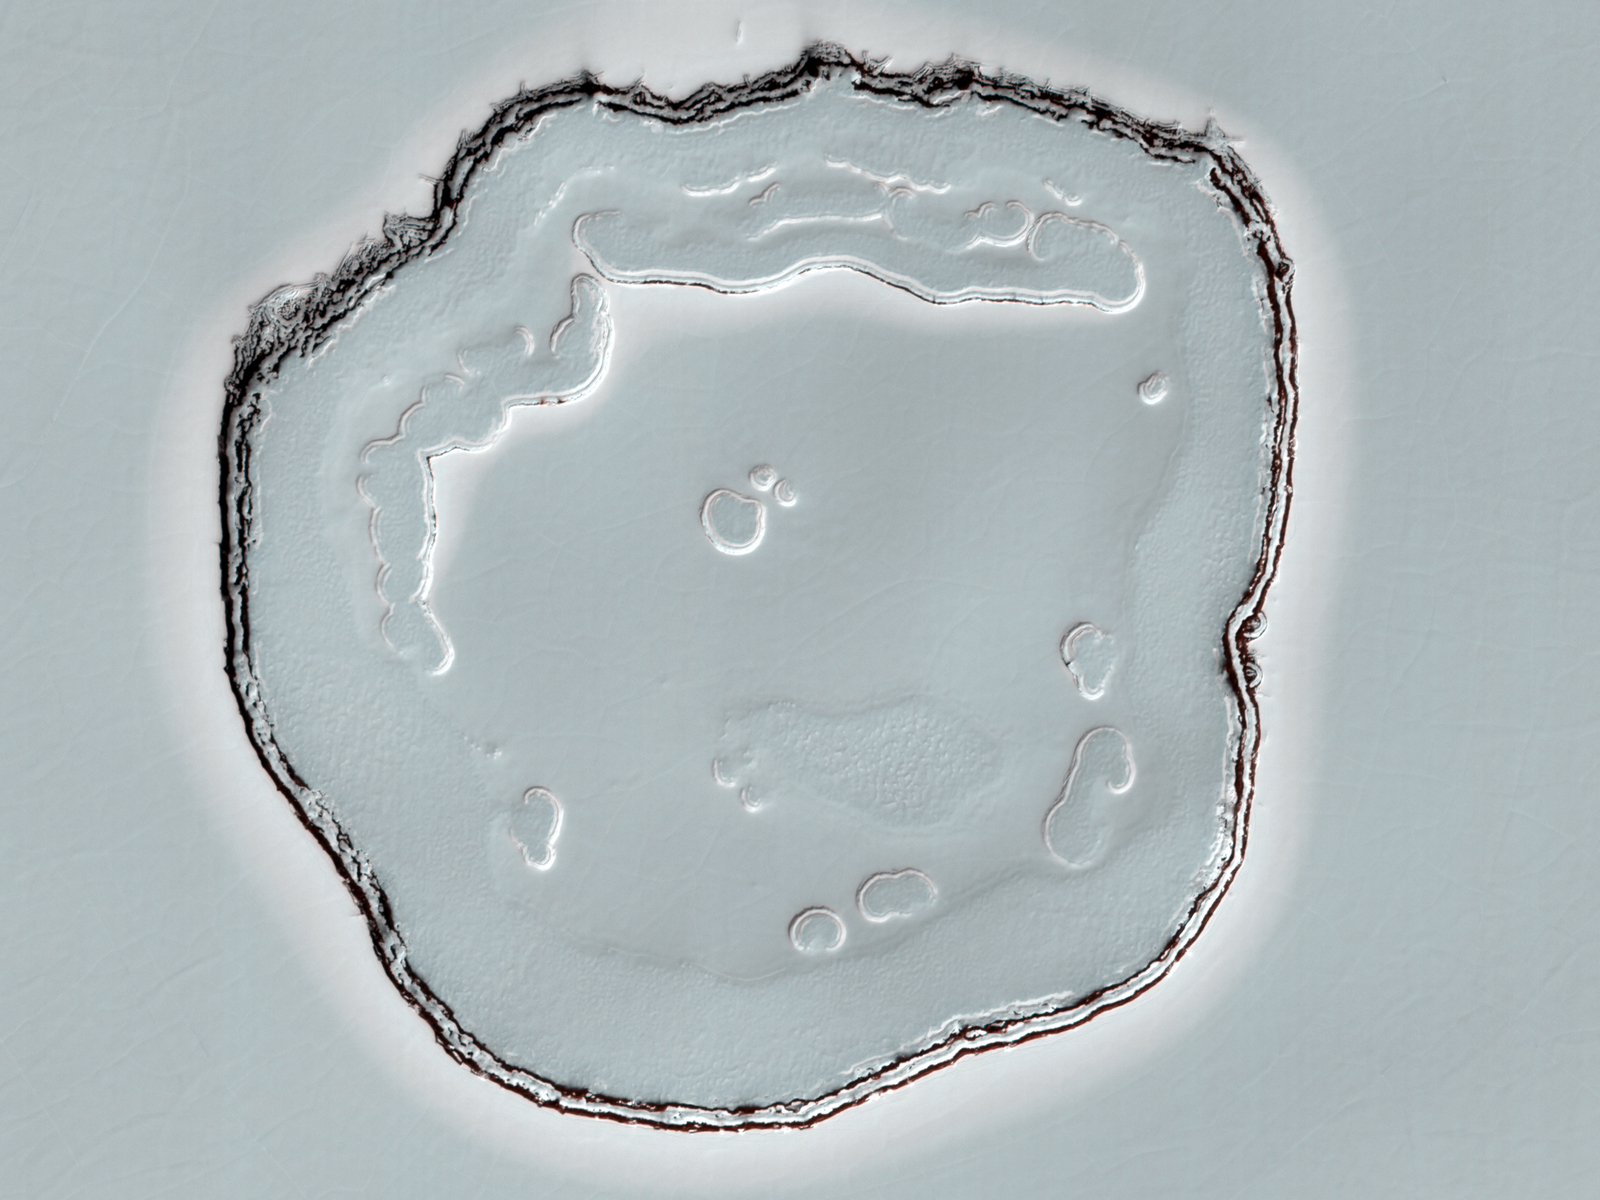 Dry ice causes "Swiss Cheese" terrain on Mars.